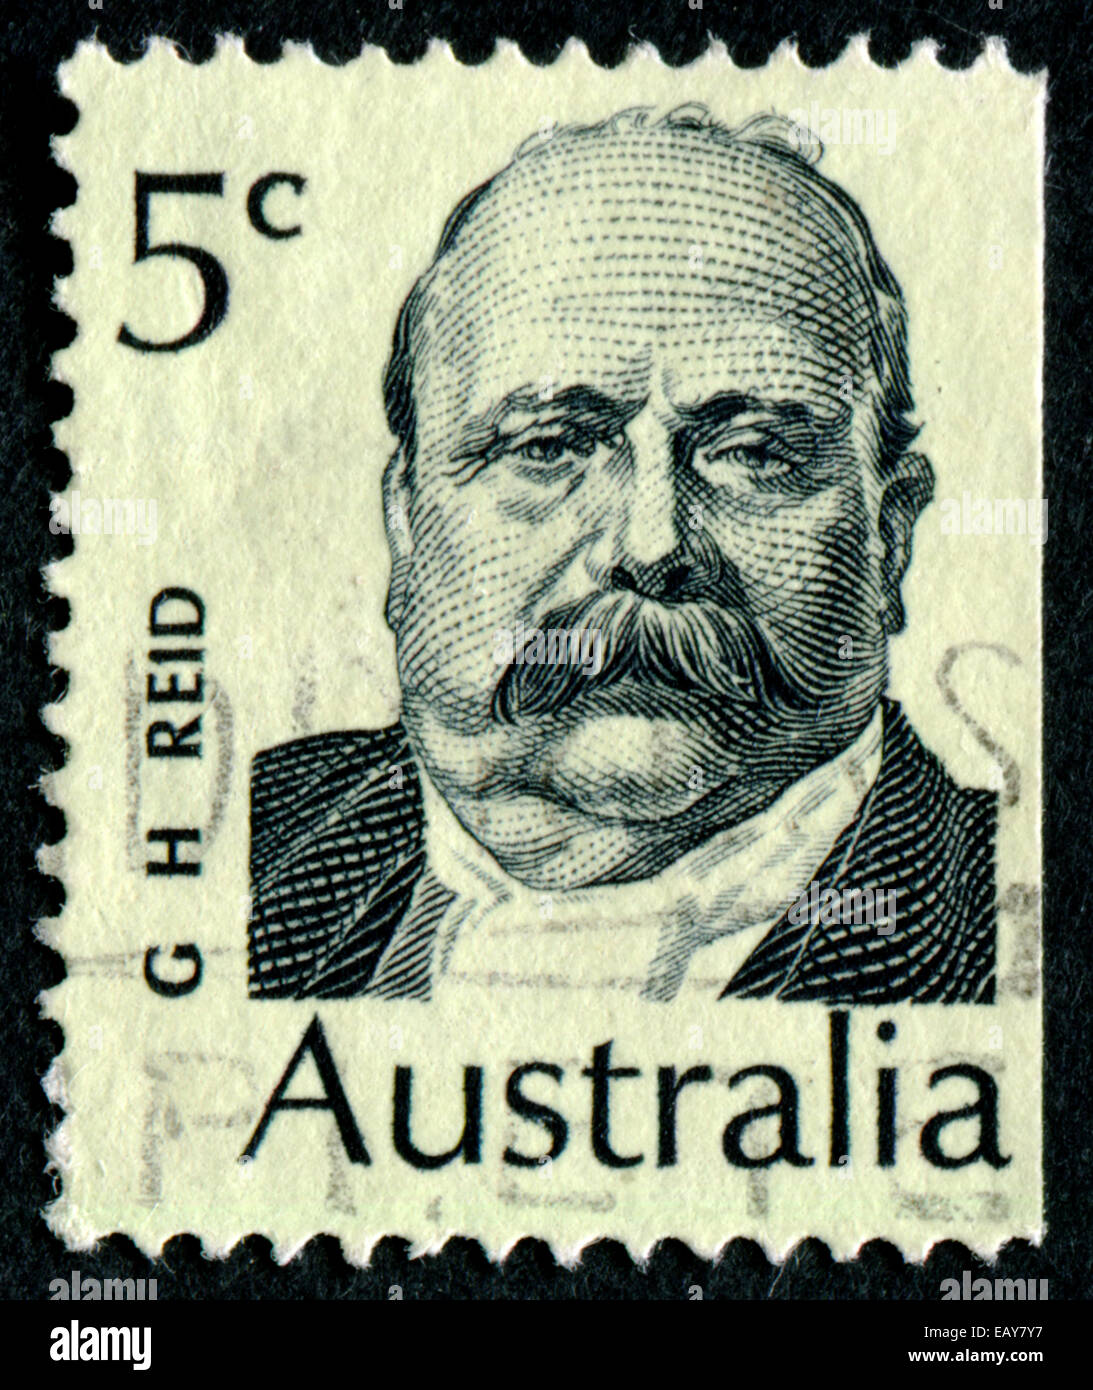 AUSTRALIA - CIRCA 1969: A stamp printed in Australia shows Sir George Reid was an Australian politician, Premier of New South Wa Stock Photo